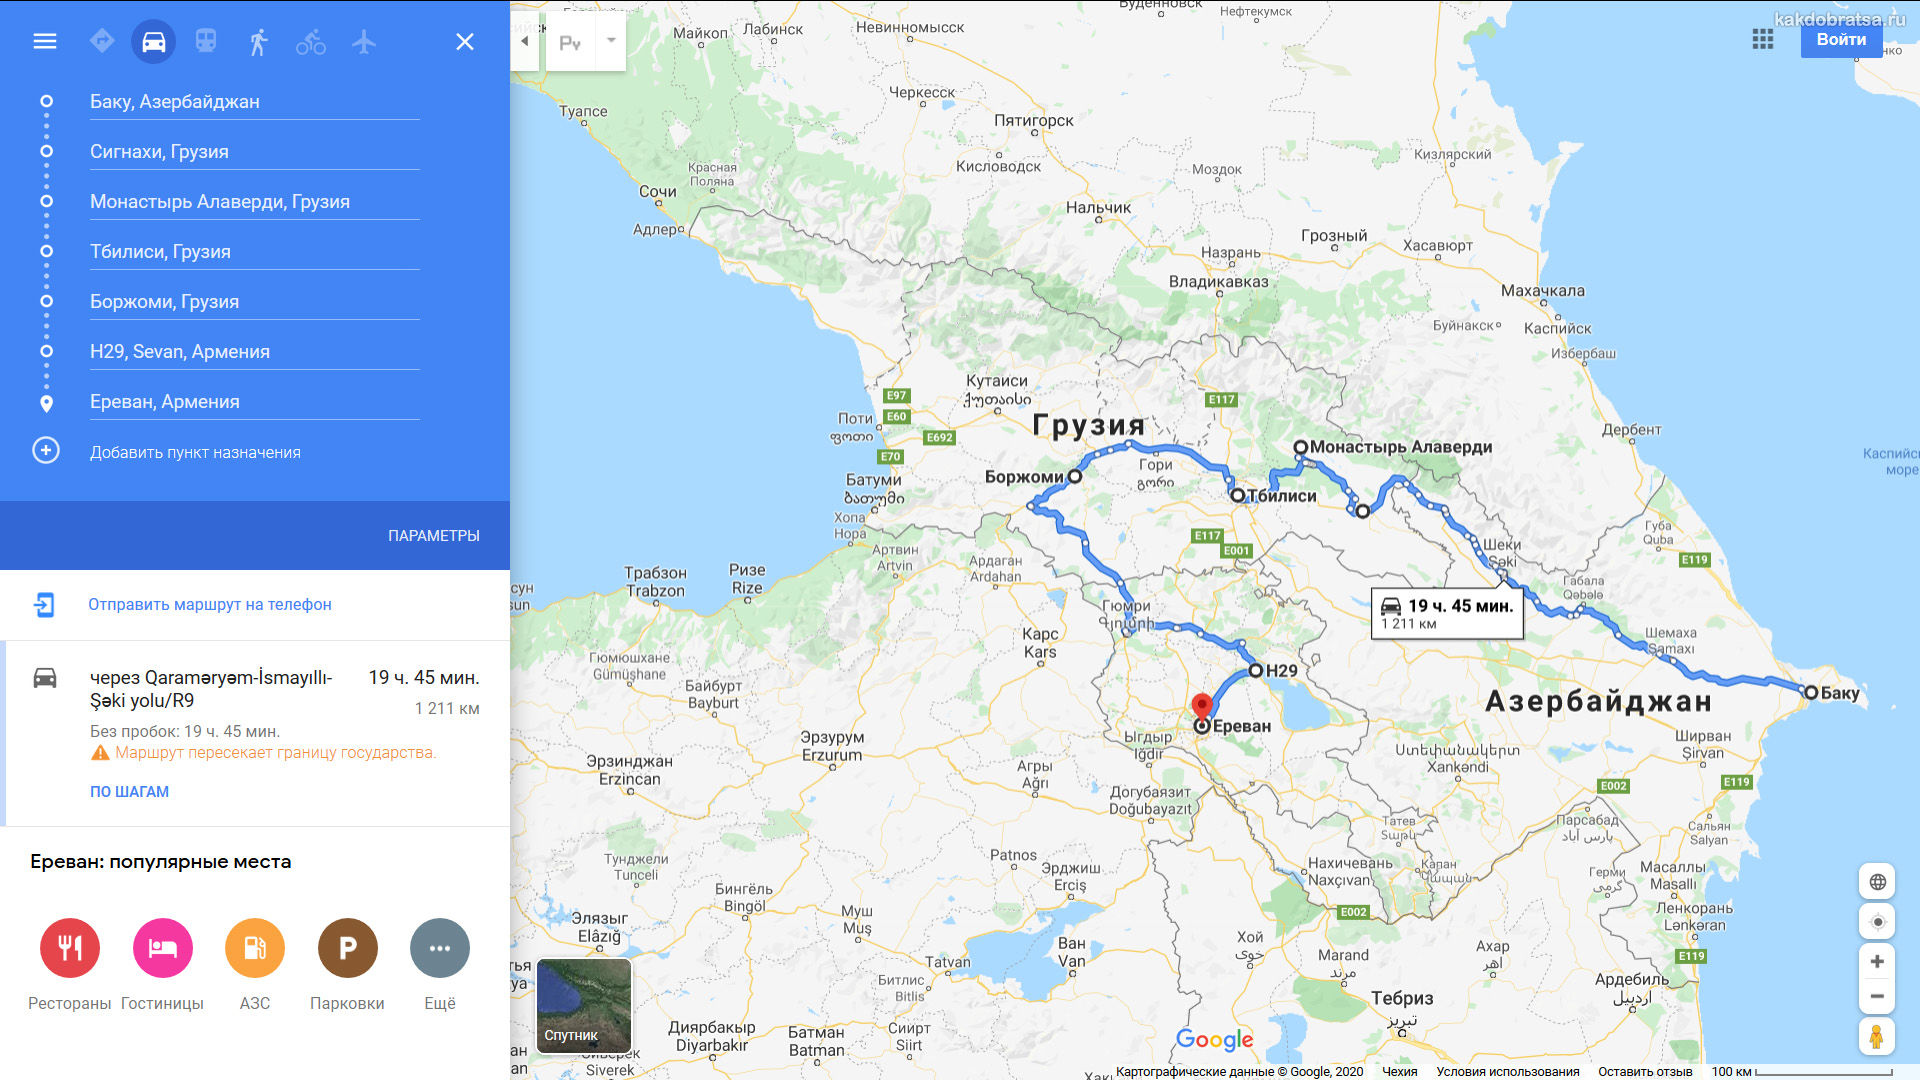 Карта маршрута путешествия по Закавказью Азербайджан, Грузия и Армения